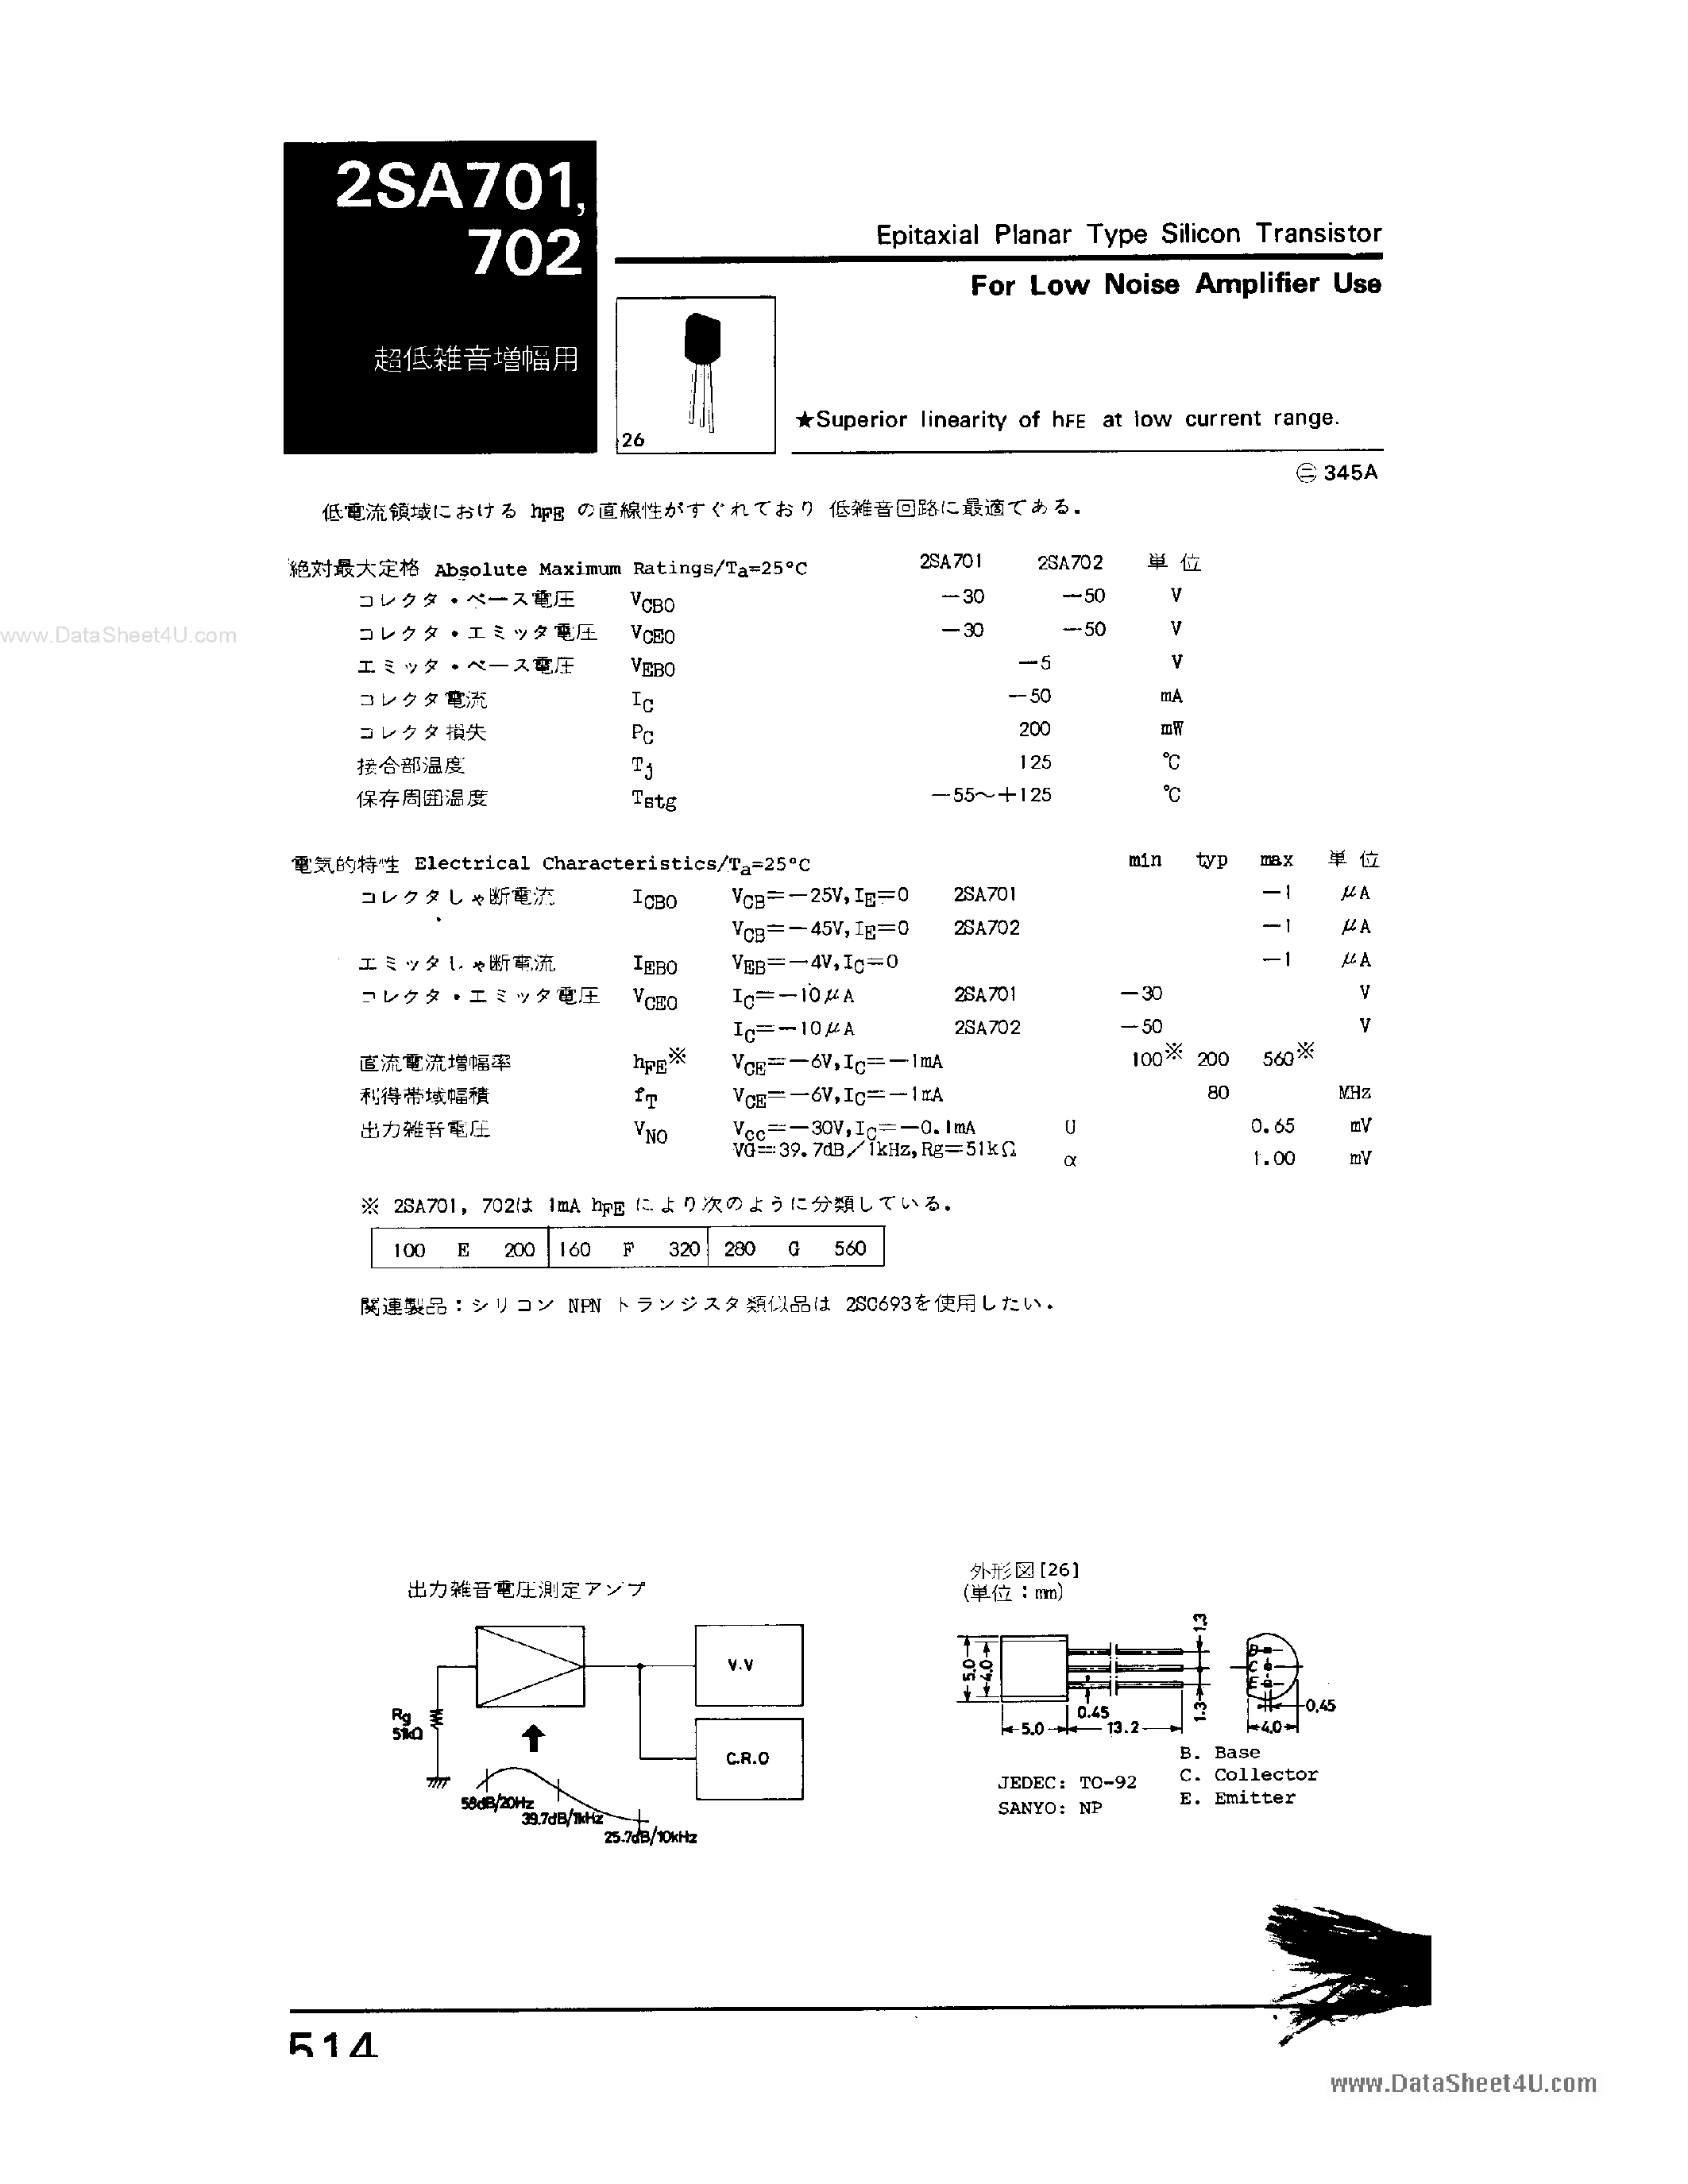 Даташит 2SA701 - (2SA701 / 2SA702) EPITAXIAL PLANAR TYPE SILICON TRANSISTOR страница 1